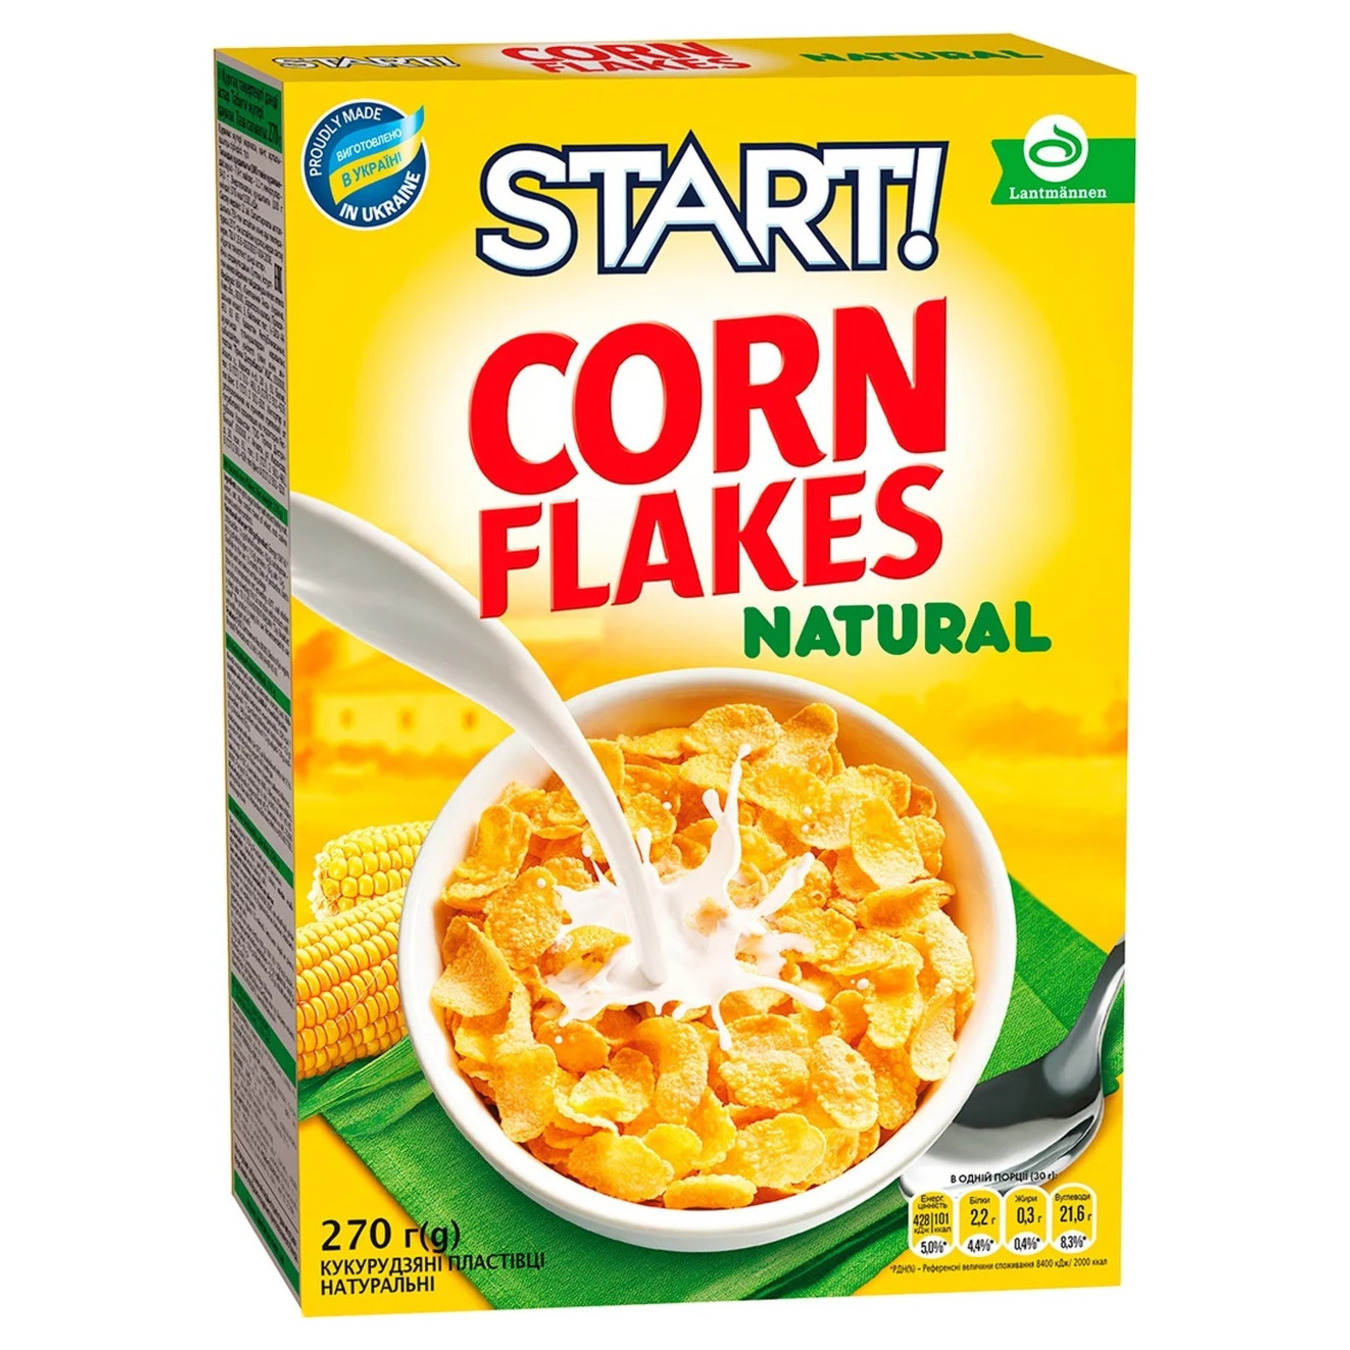 START natural corn flakes 270g